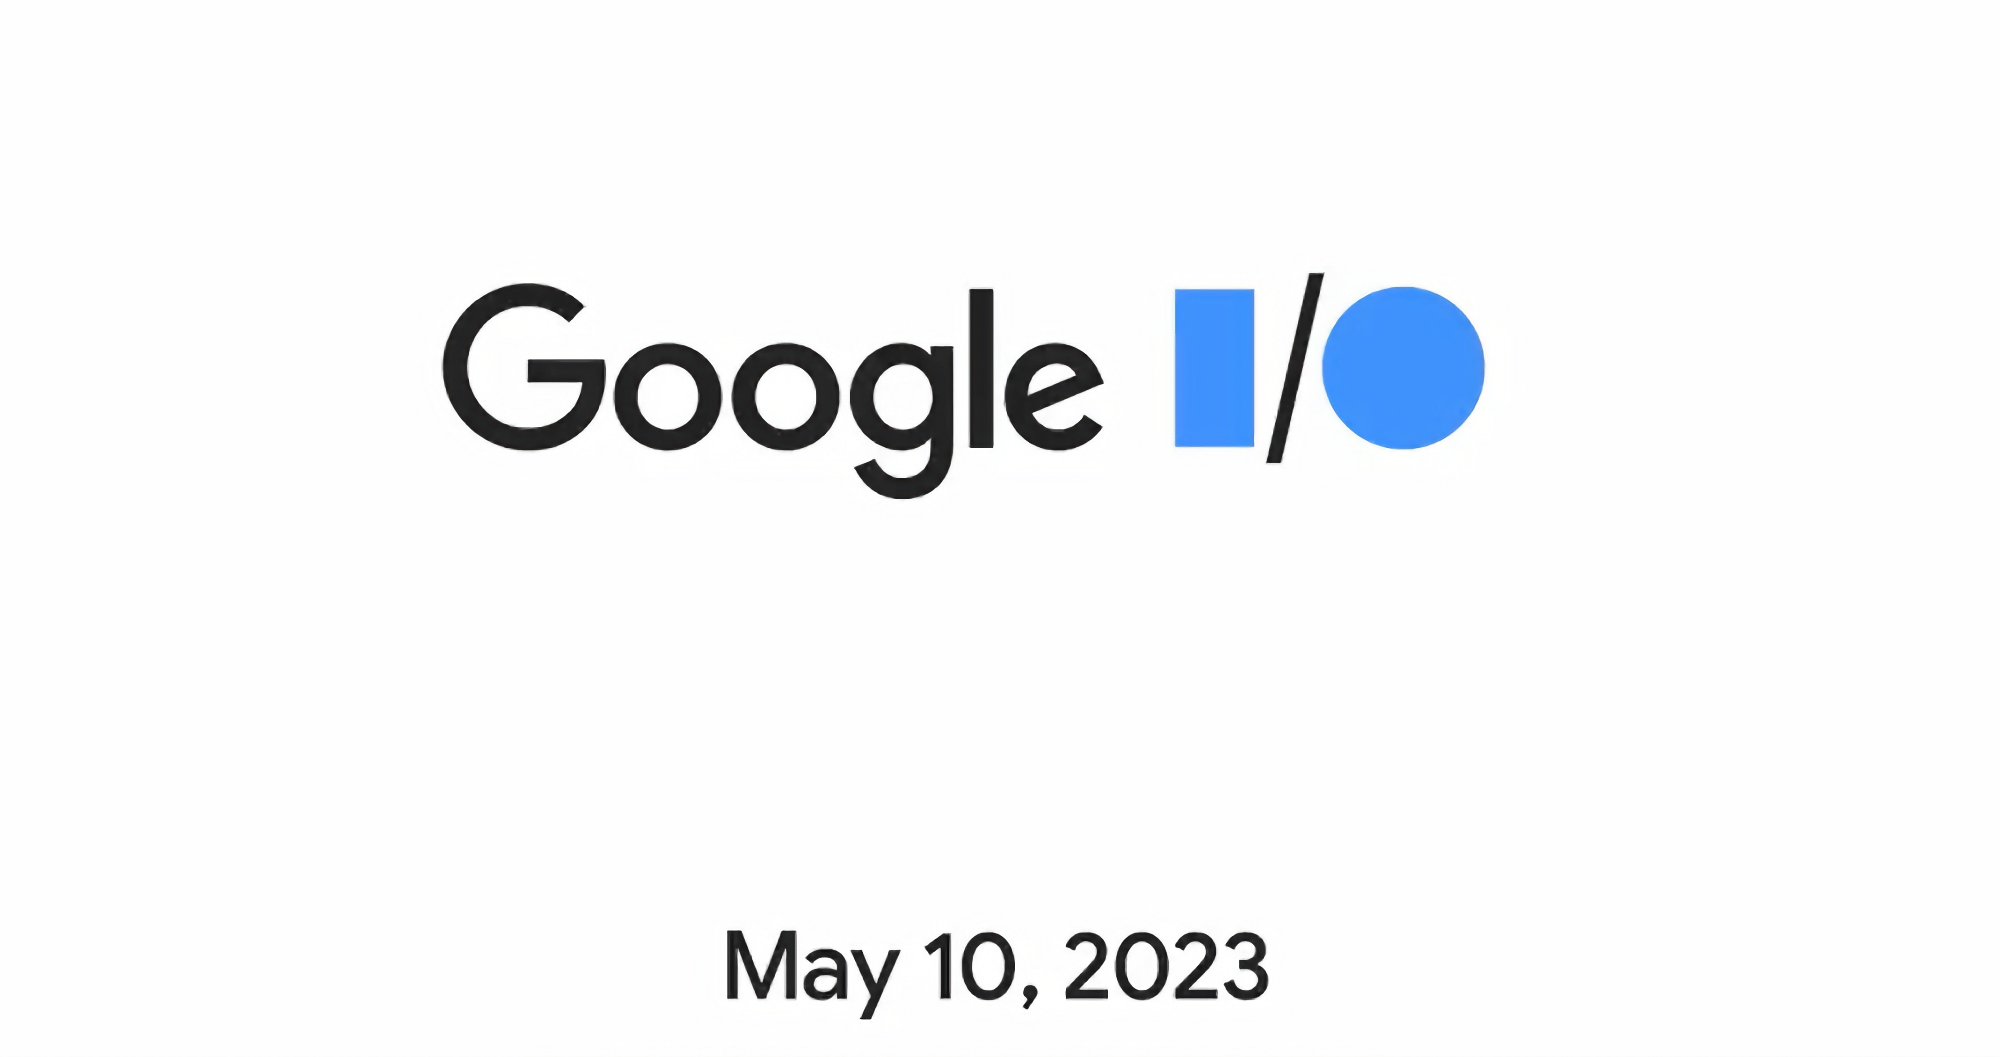 Google I/O 2023 findet am 10. Mai statt: Android 14, Pixel Tablet und Pixel 7a